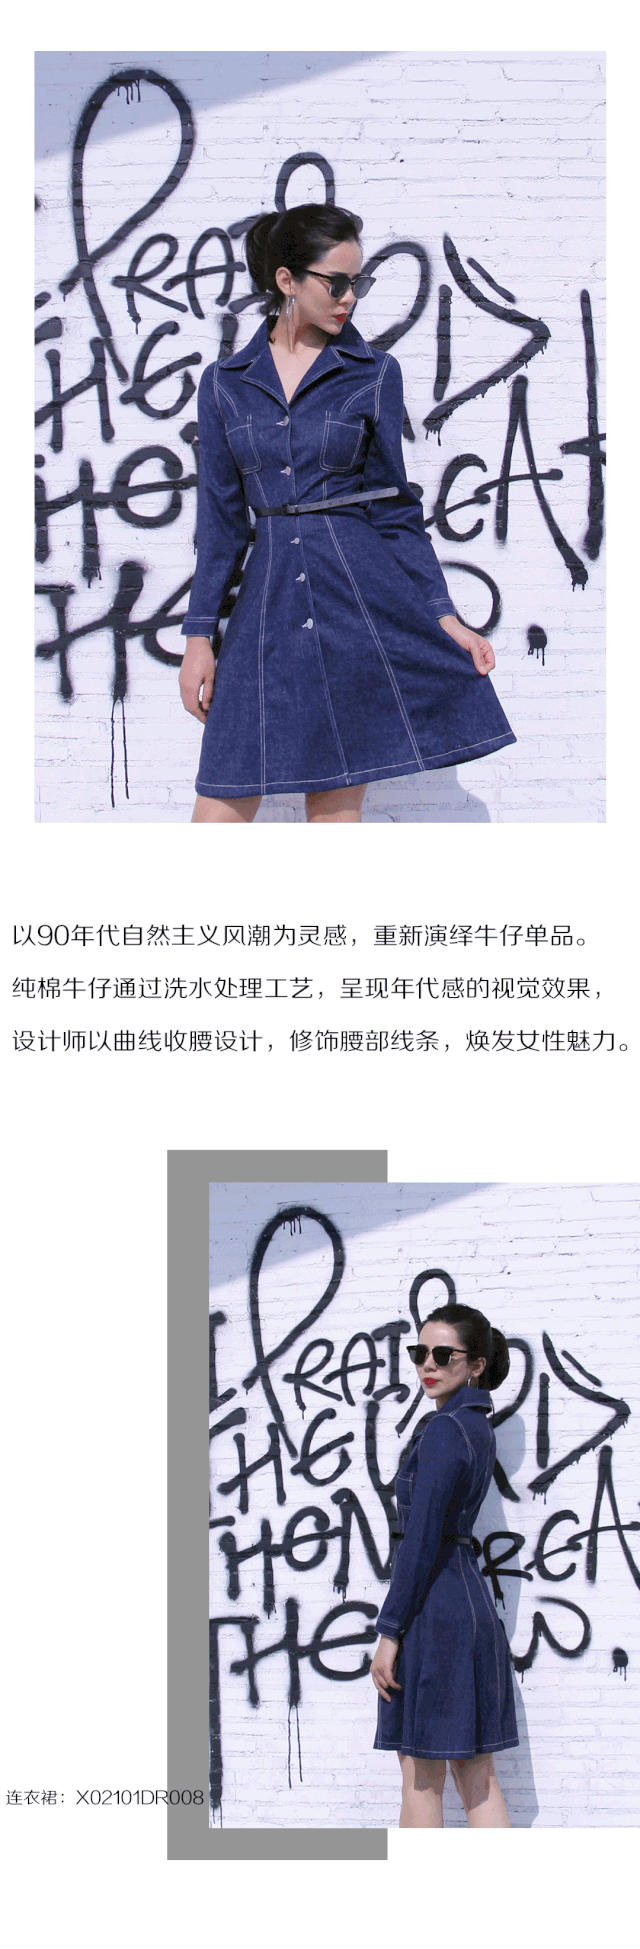 XIAOMO筱陌女装品牌2020春季新品上市